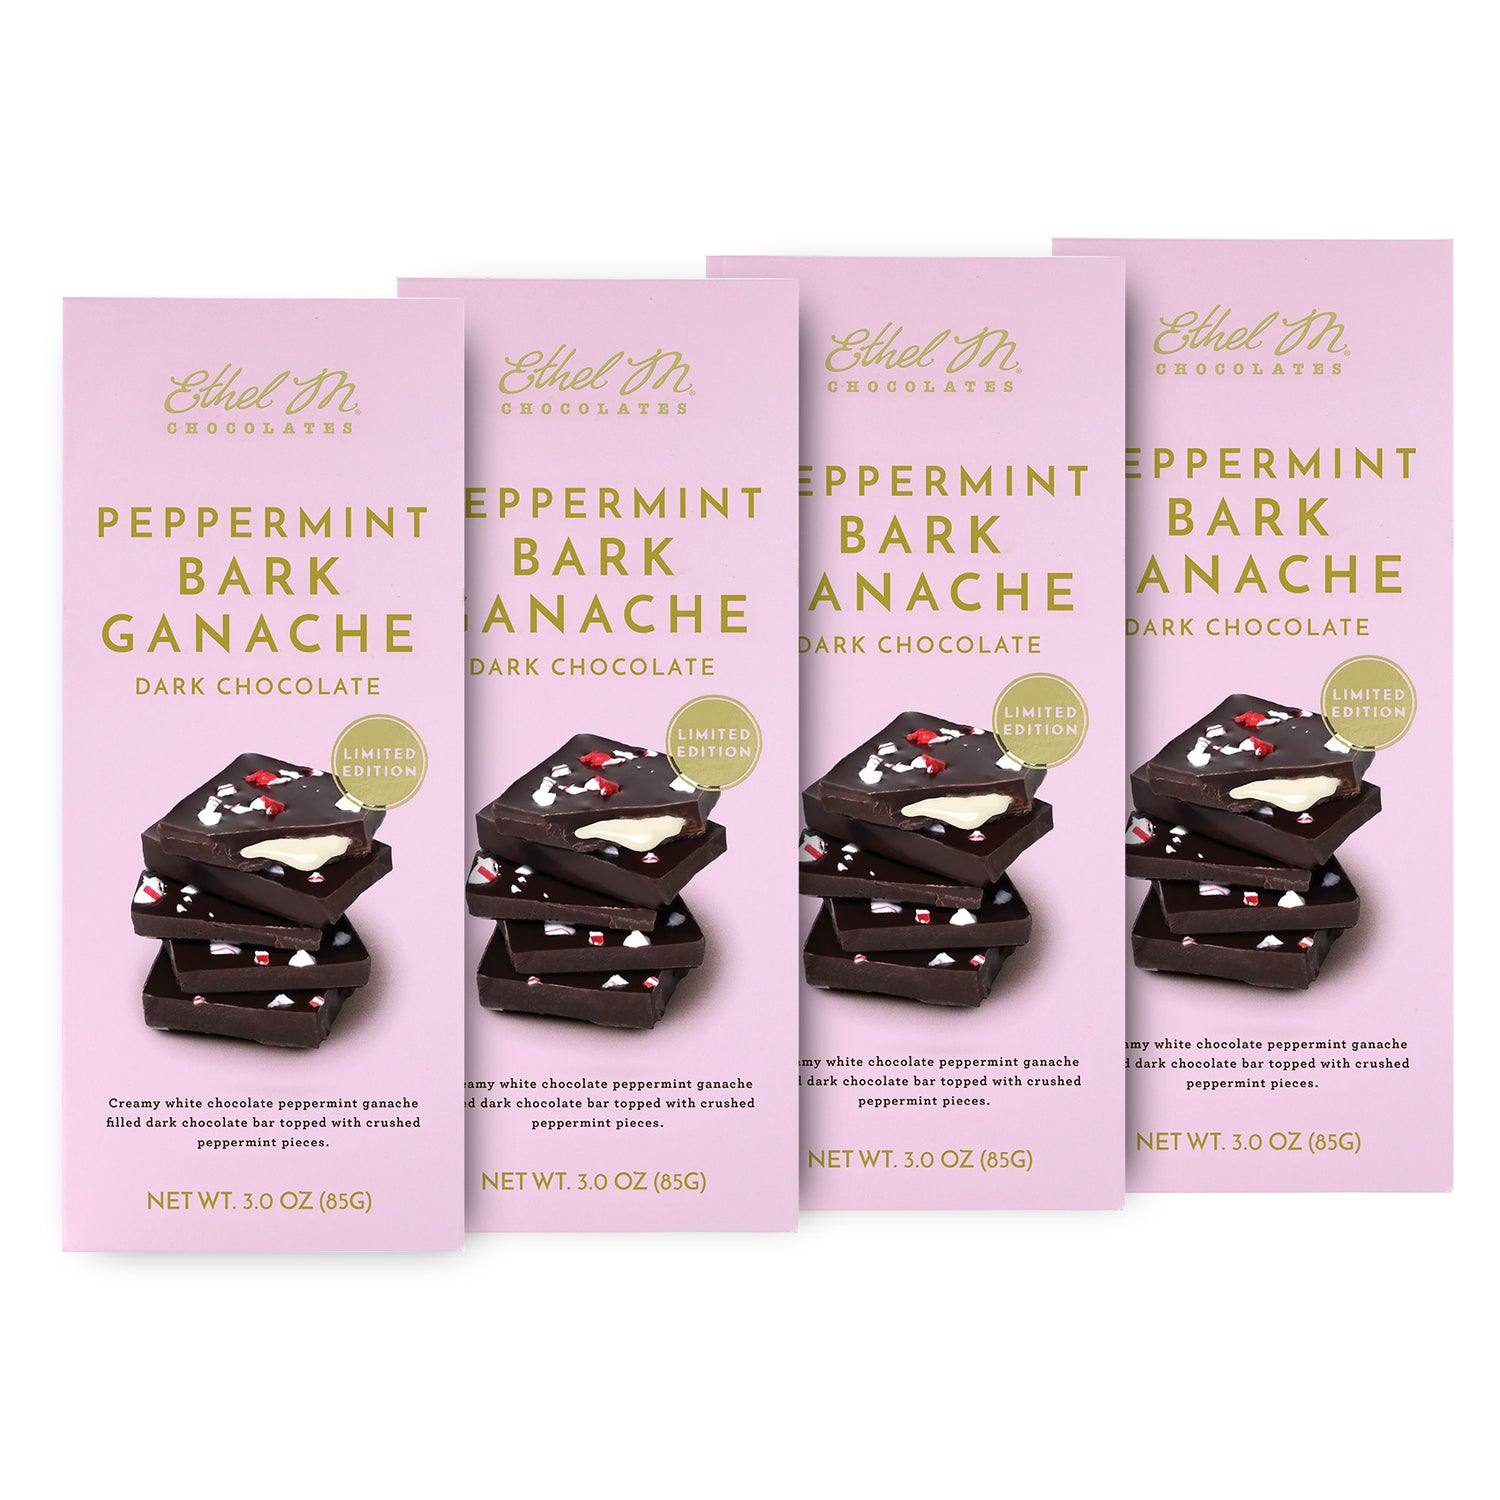 Ethel M Chocolates Peppermint Bark Ganache Dark Chocolate Tablet Bar set of 4